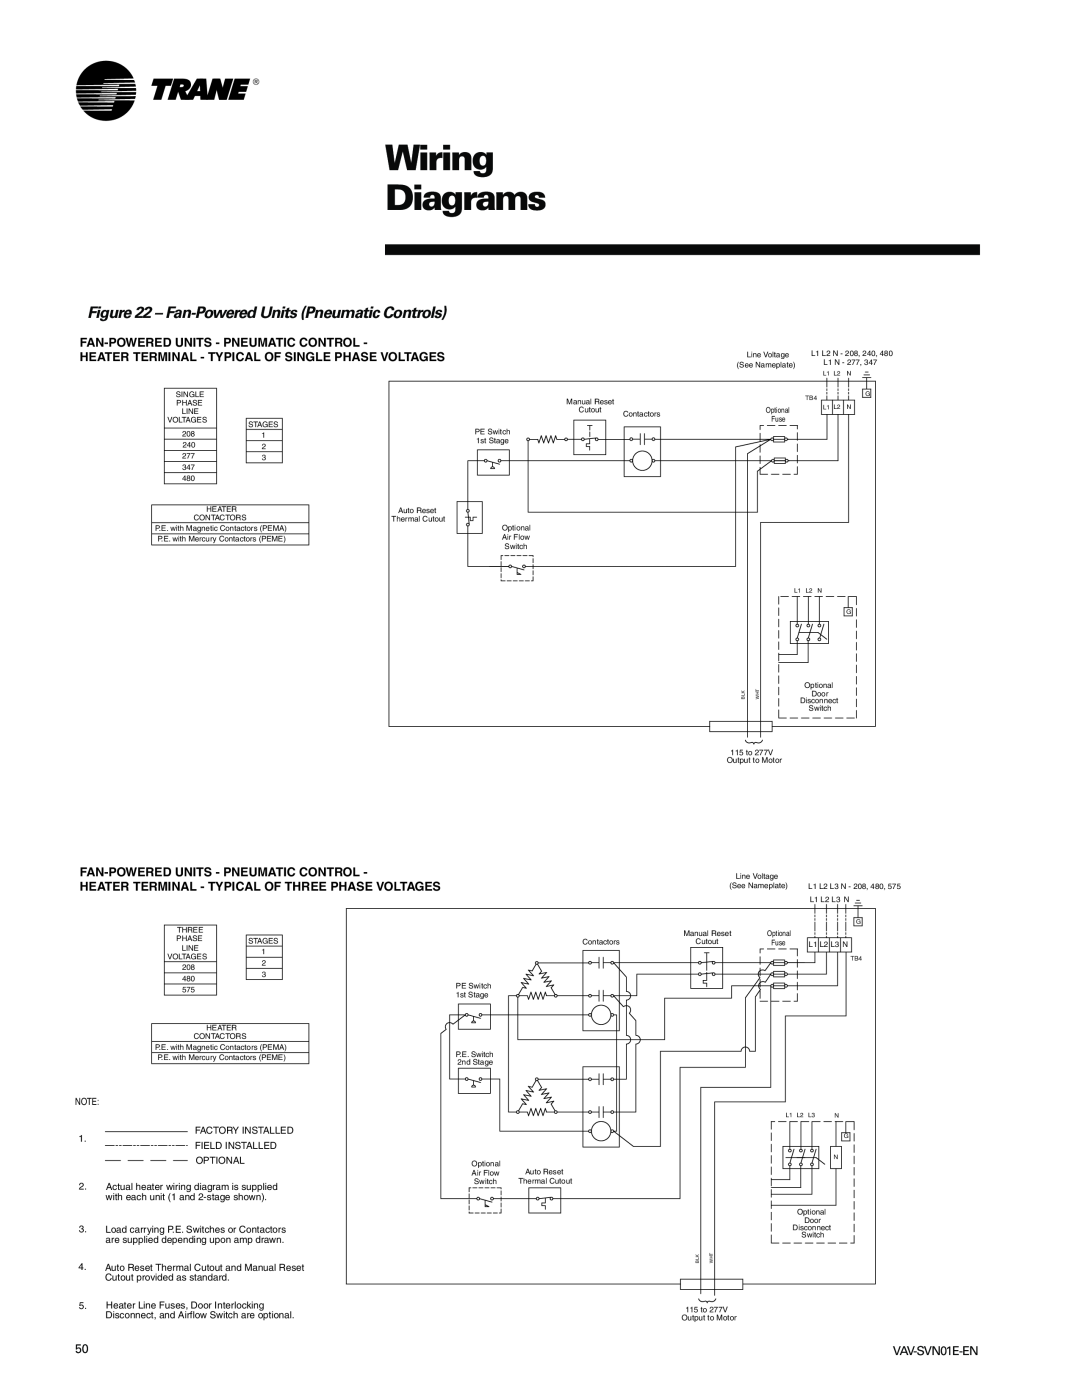 Trane VAV-SVN01E-EN, Trane manual Wiring Diagrams, Fan-PoweredUnits Pneumatic Controls, Fan-Poweredunits - Pneumatic Control 